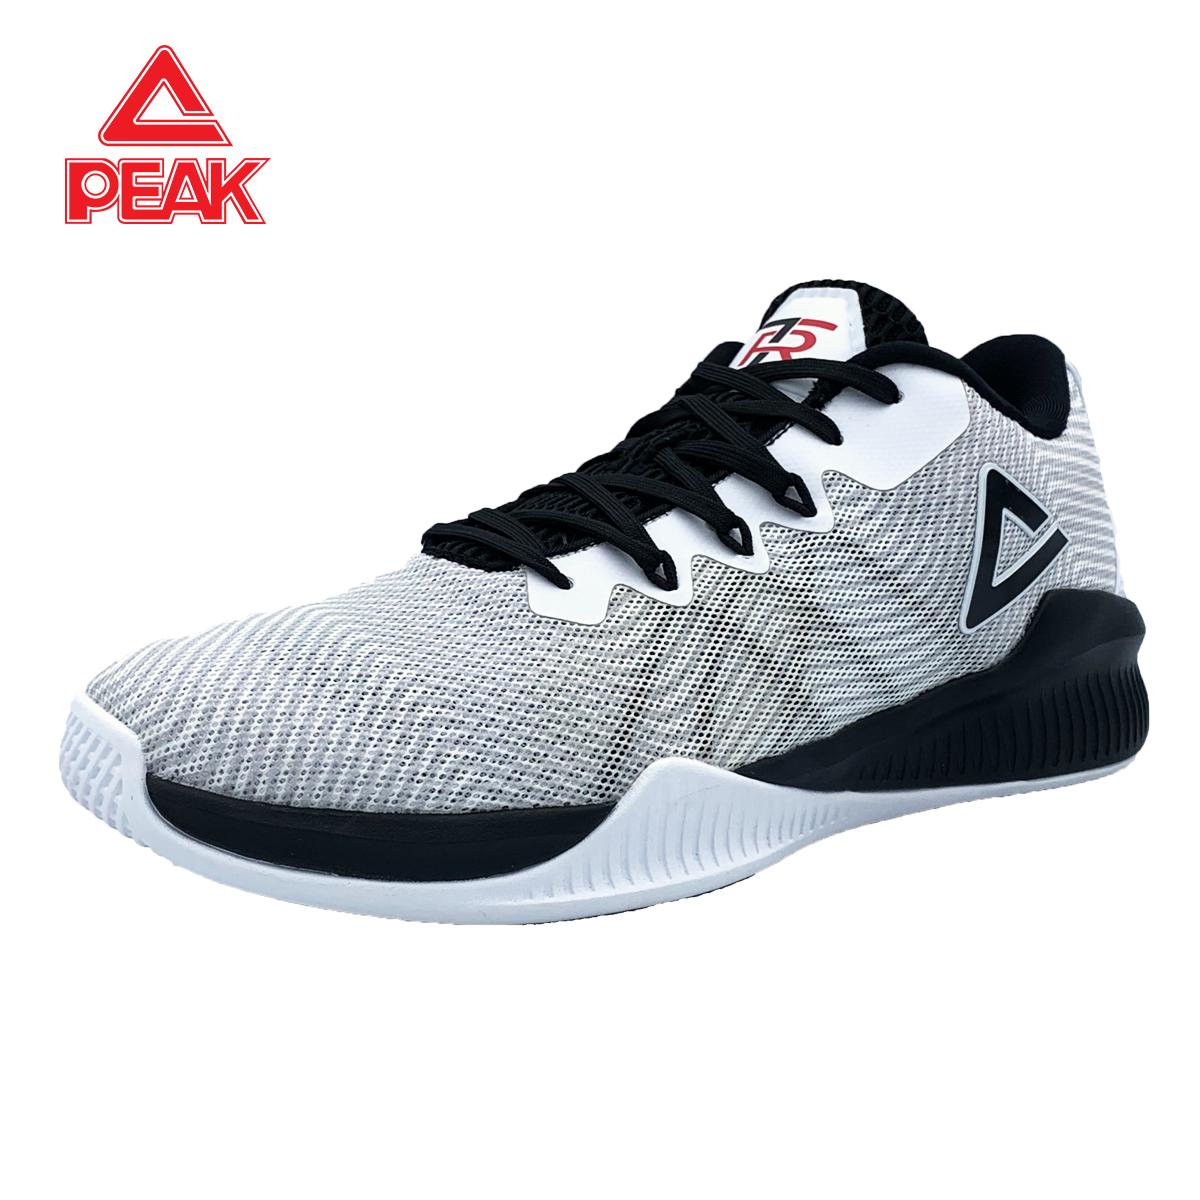 peak nba shoes